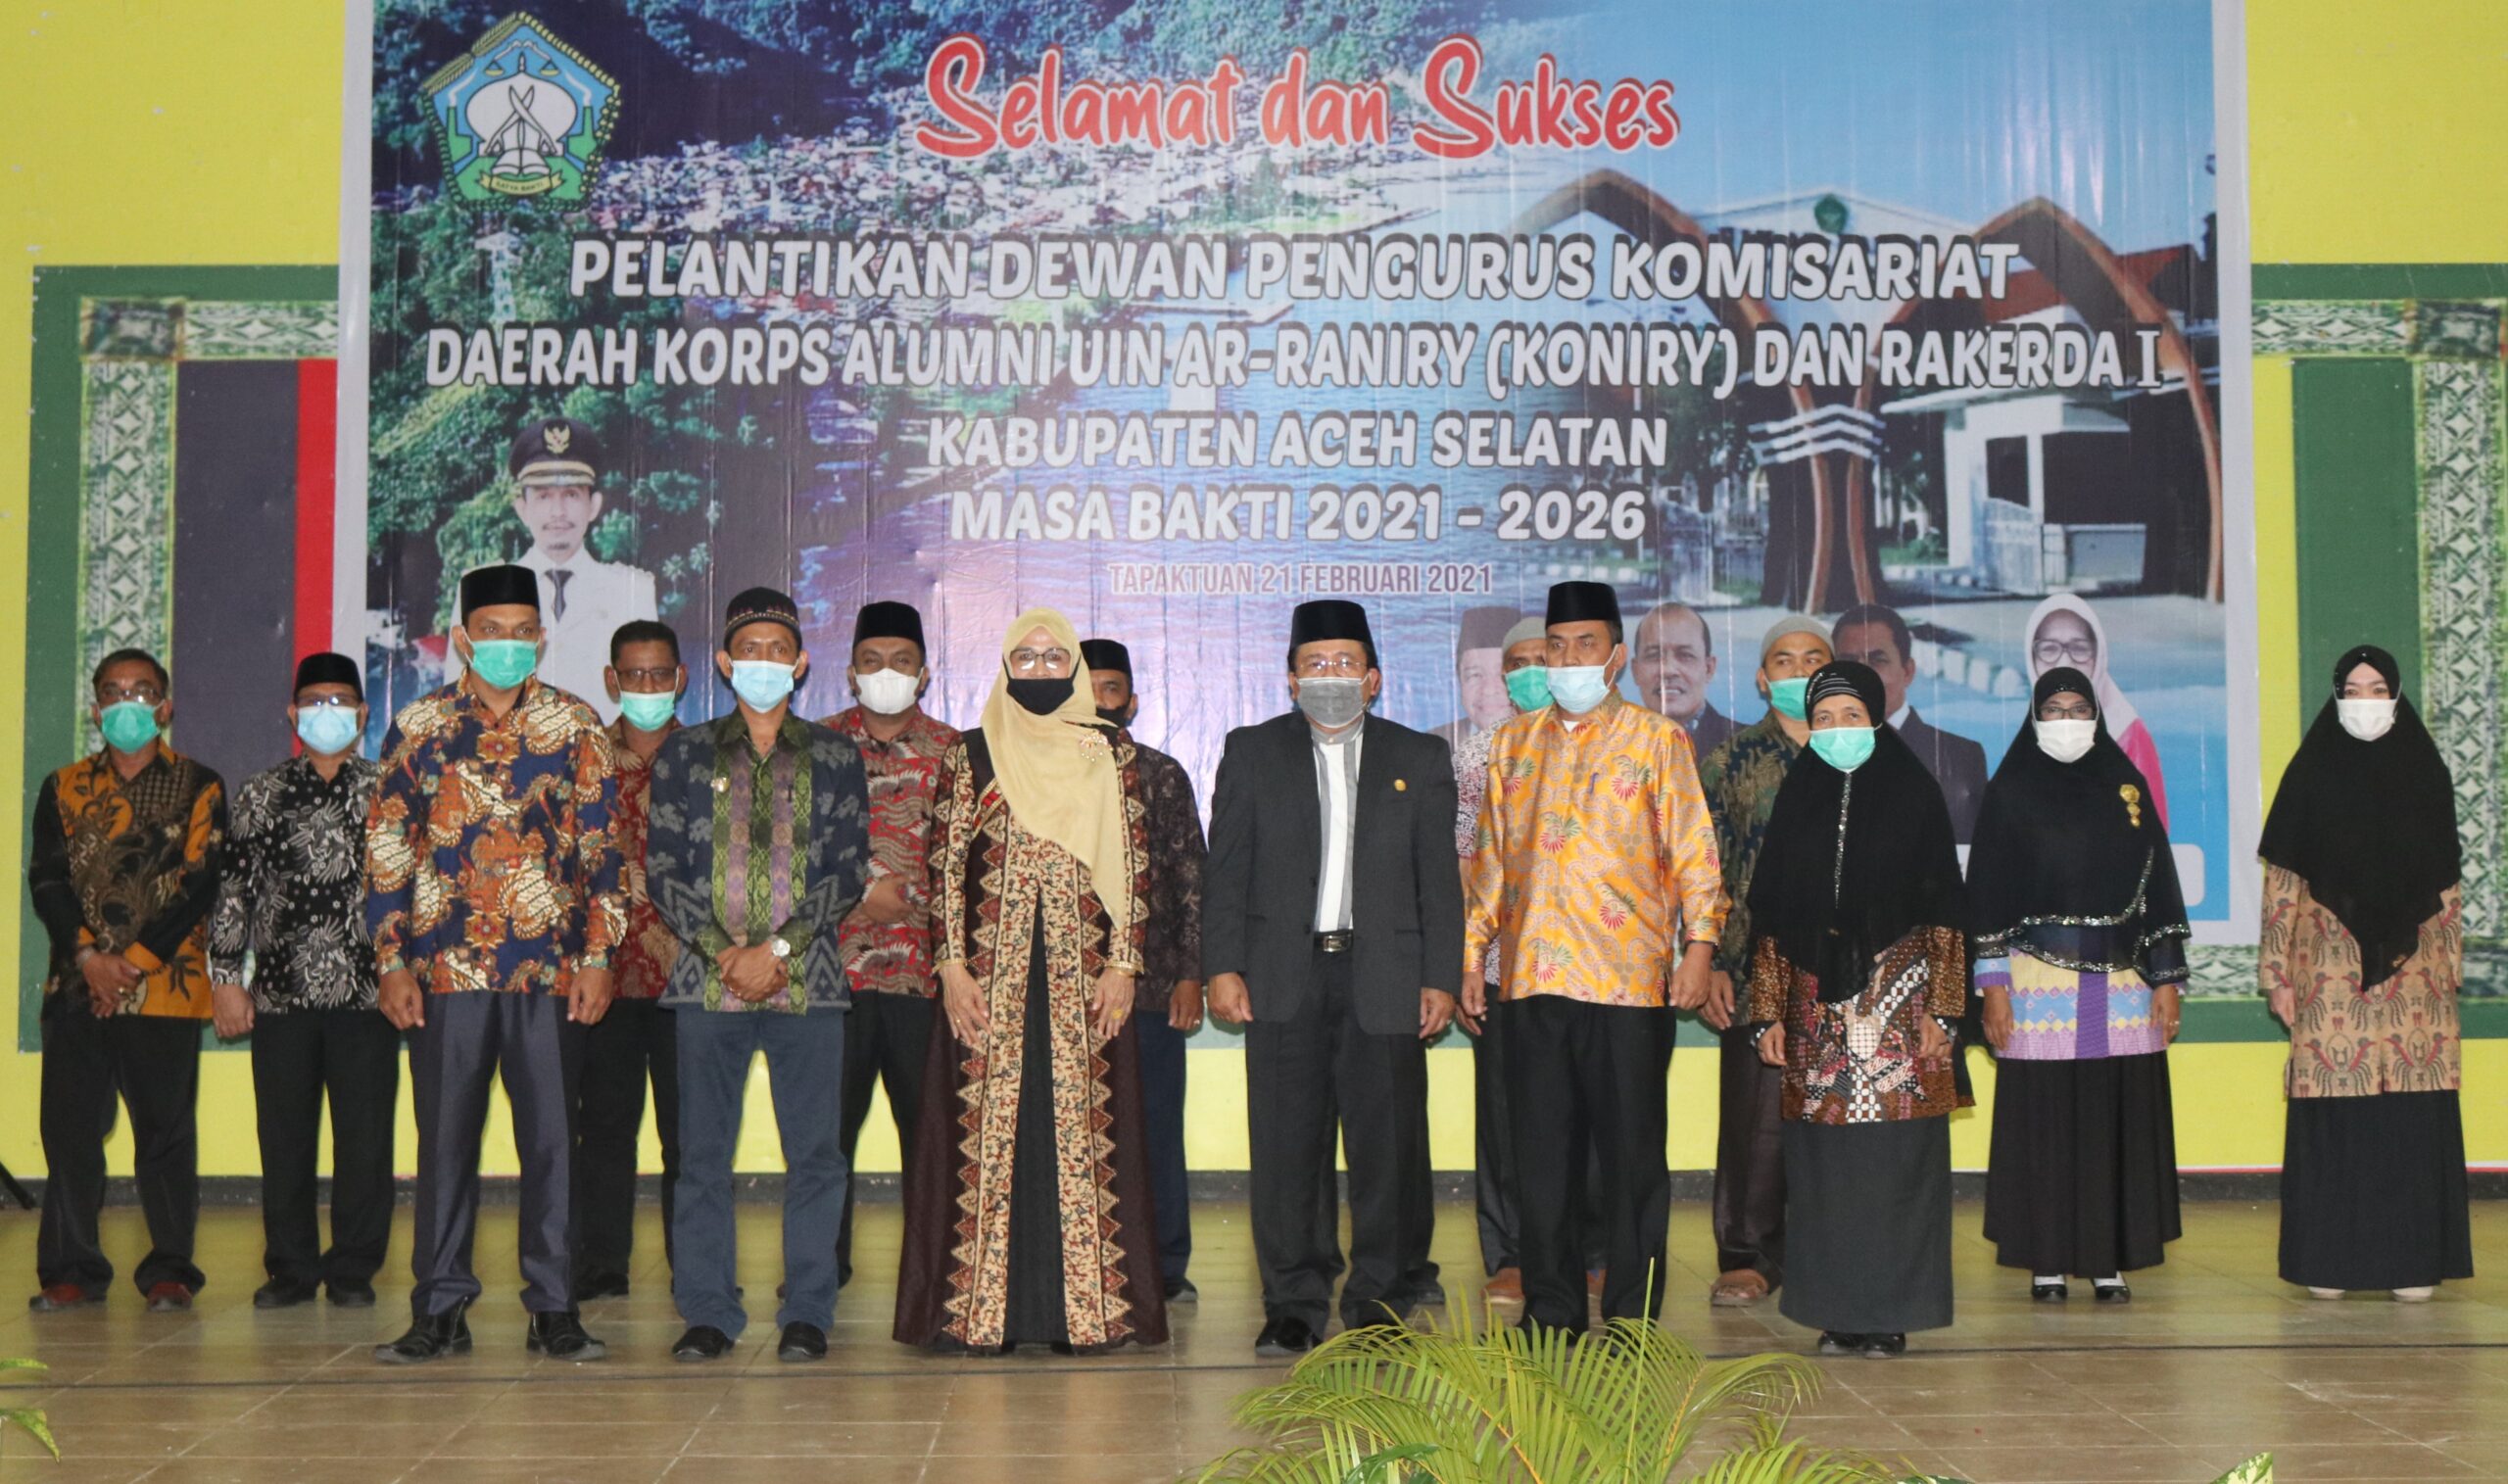 Dewan Pengurus Komisariat Daerah Korps Alumni Uin Ar-Raniry (Koniry) Kabupaten Aceh Selatan di Lantik